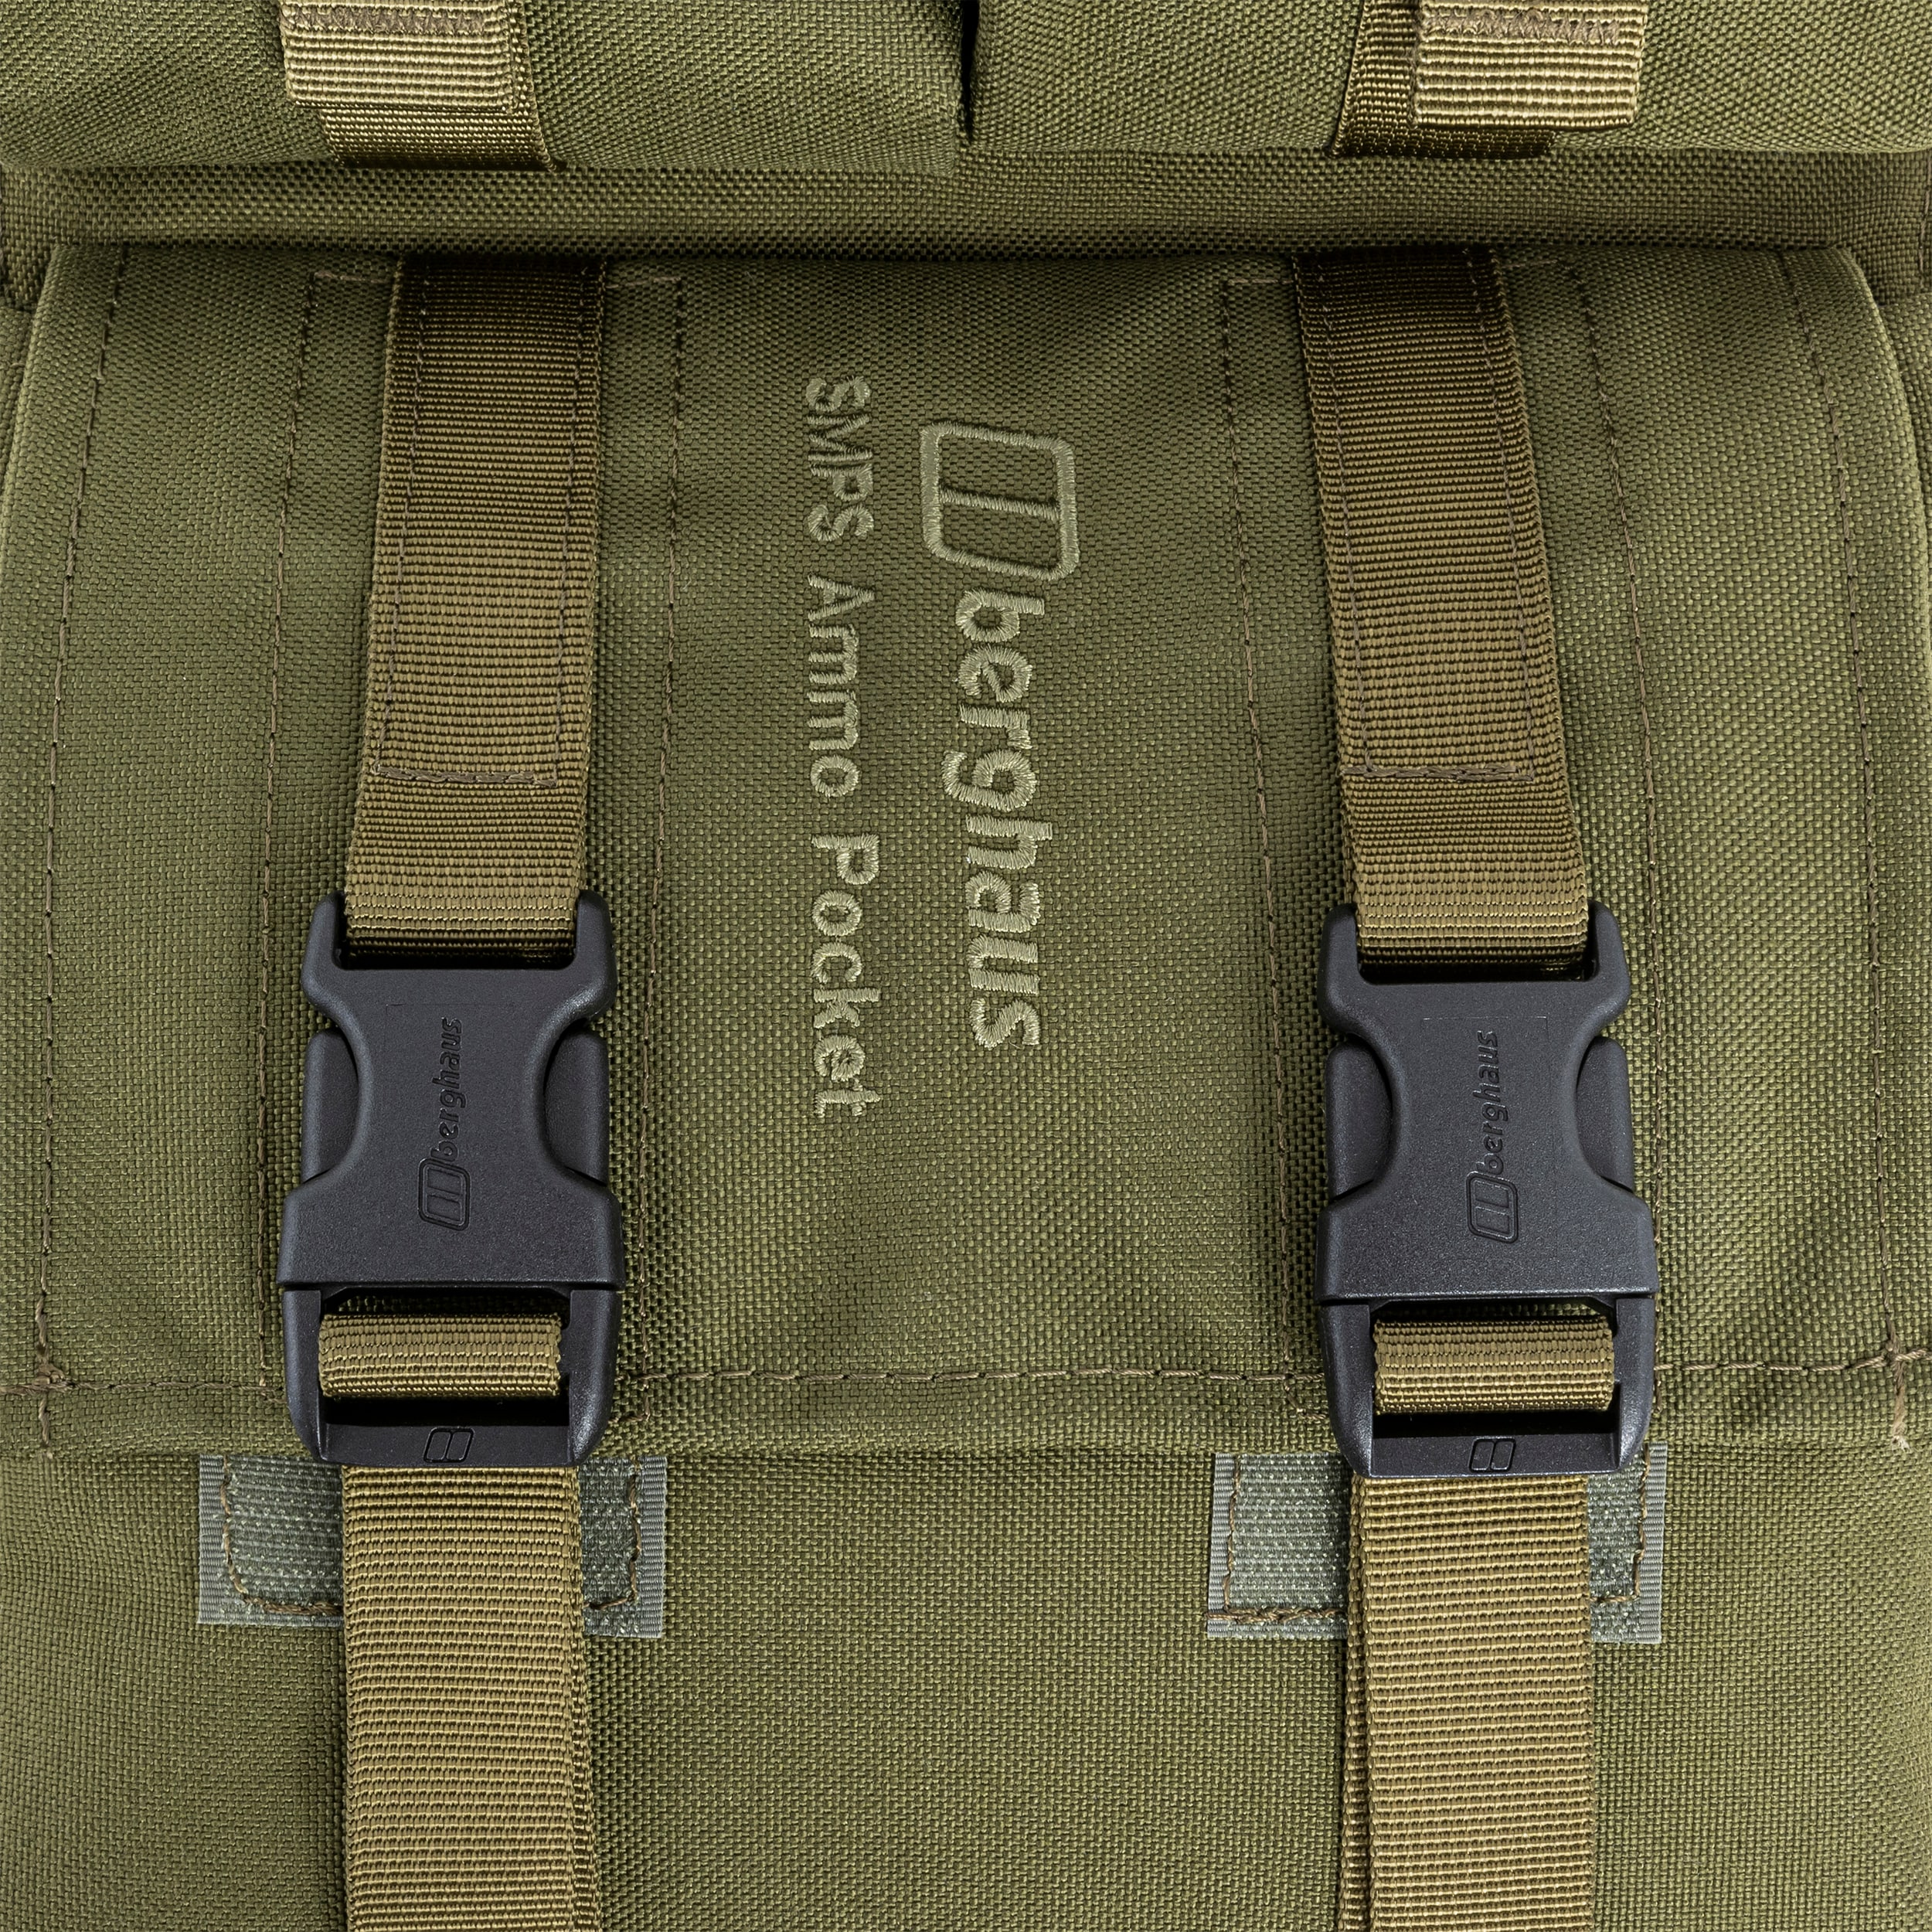 Ładownica Berghaus Tactical SMPS Ammo Pocket - Cedar